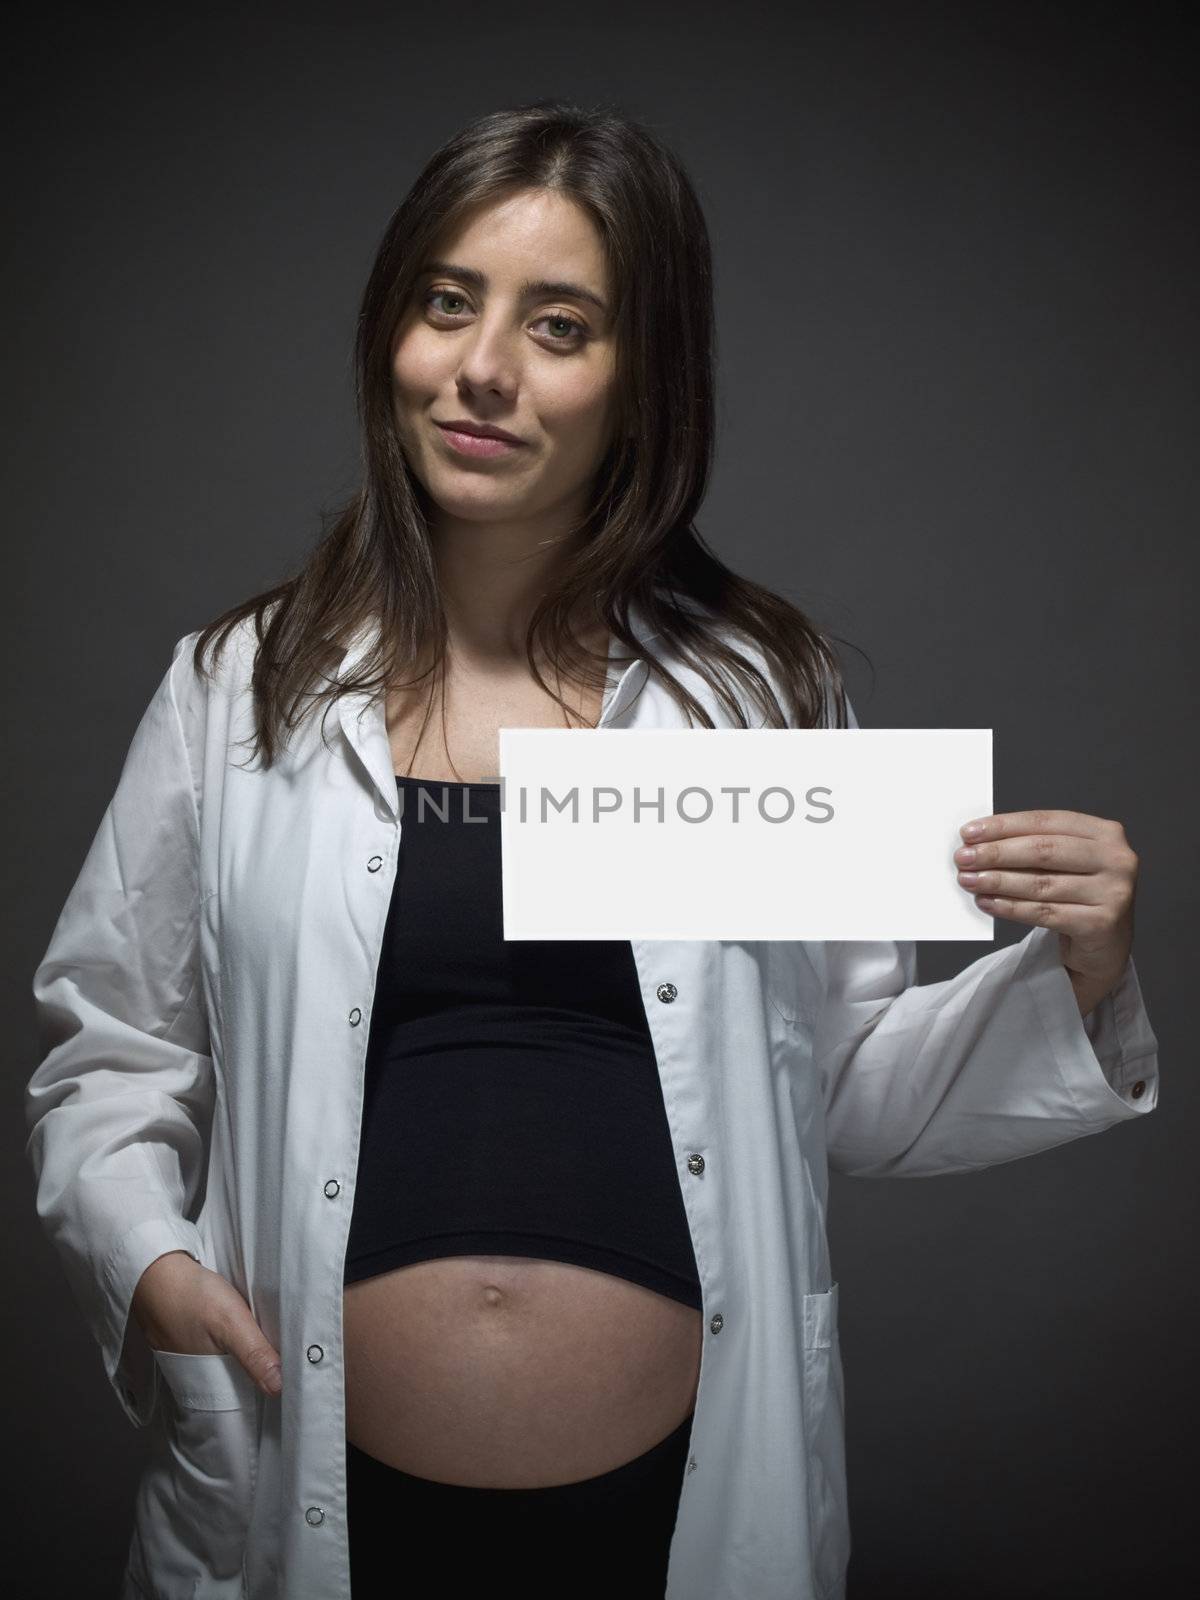 Pregnant female doctor by antonprado